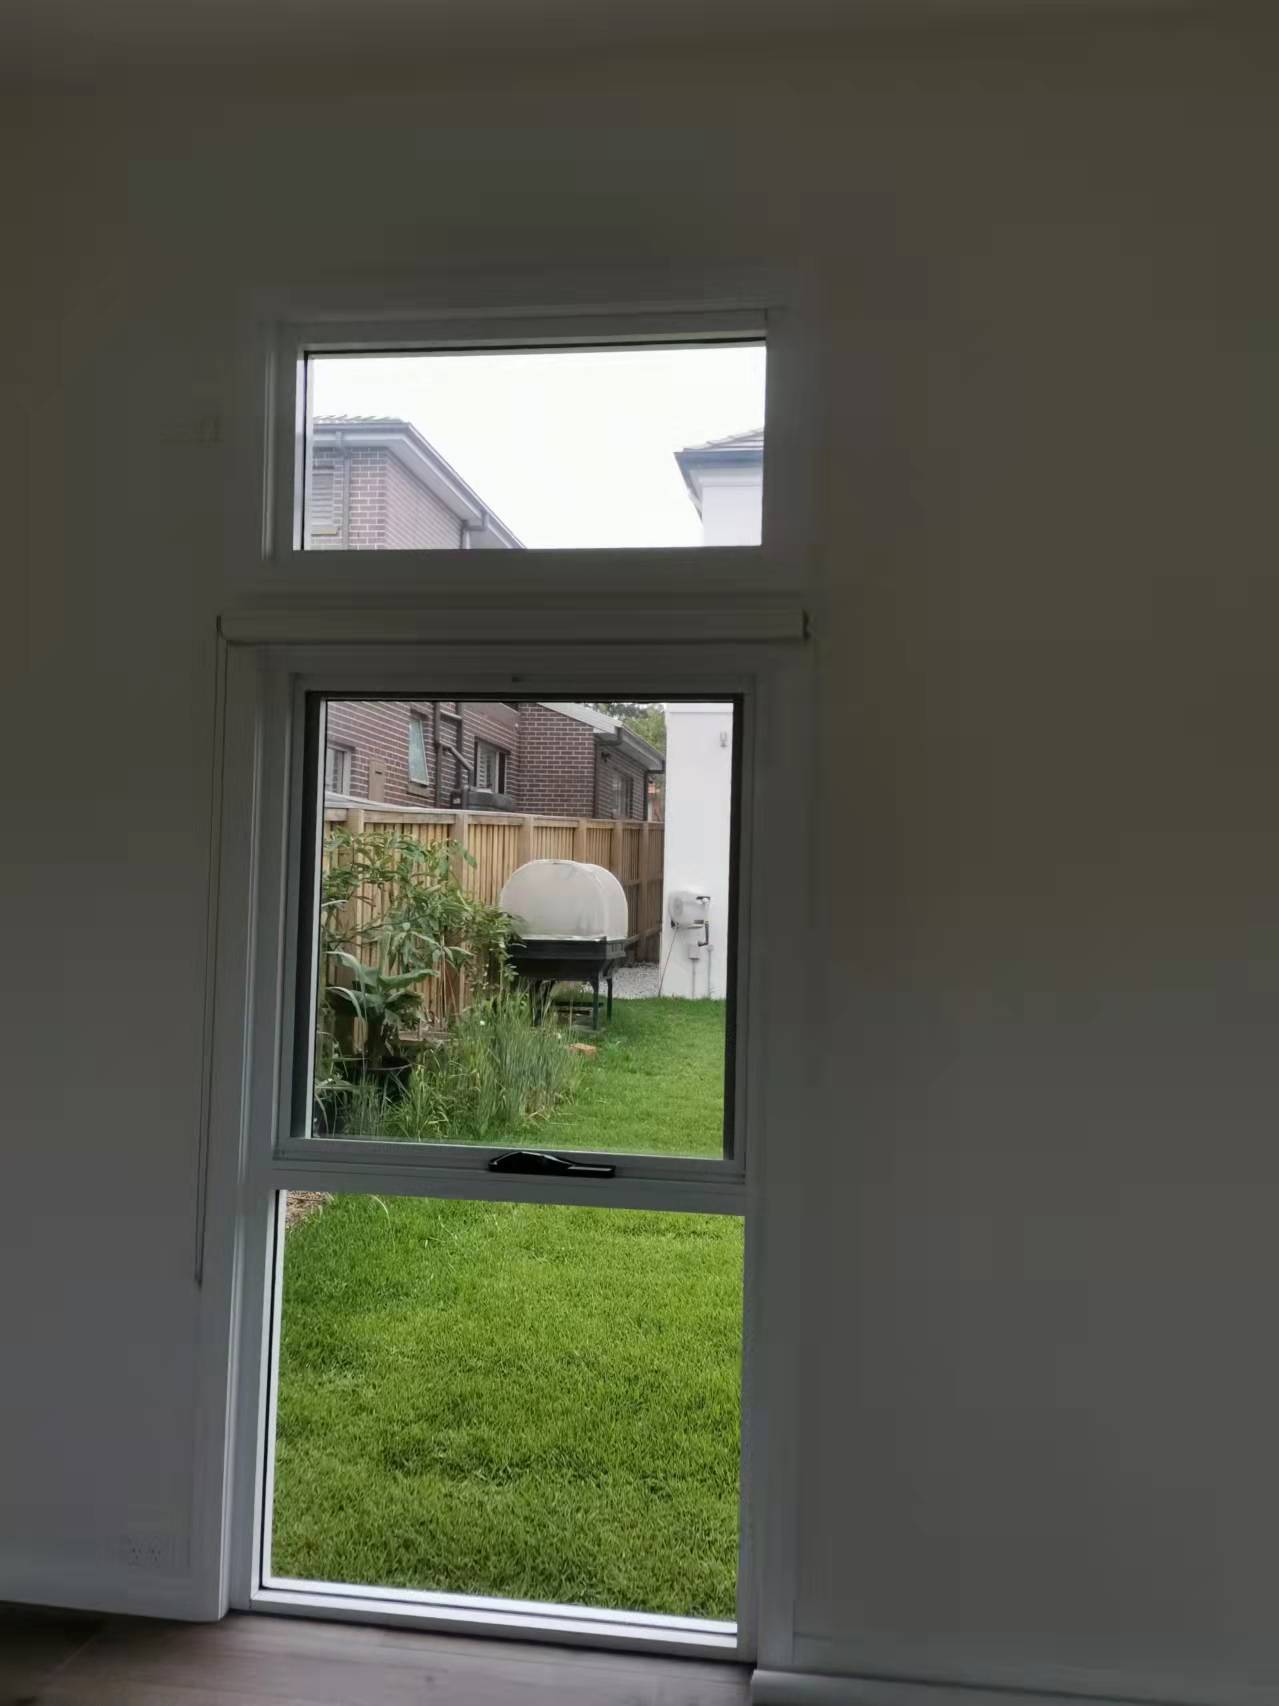 Awning Window